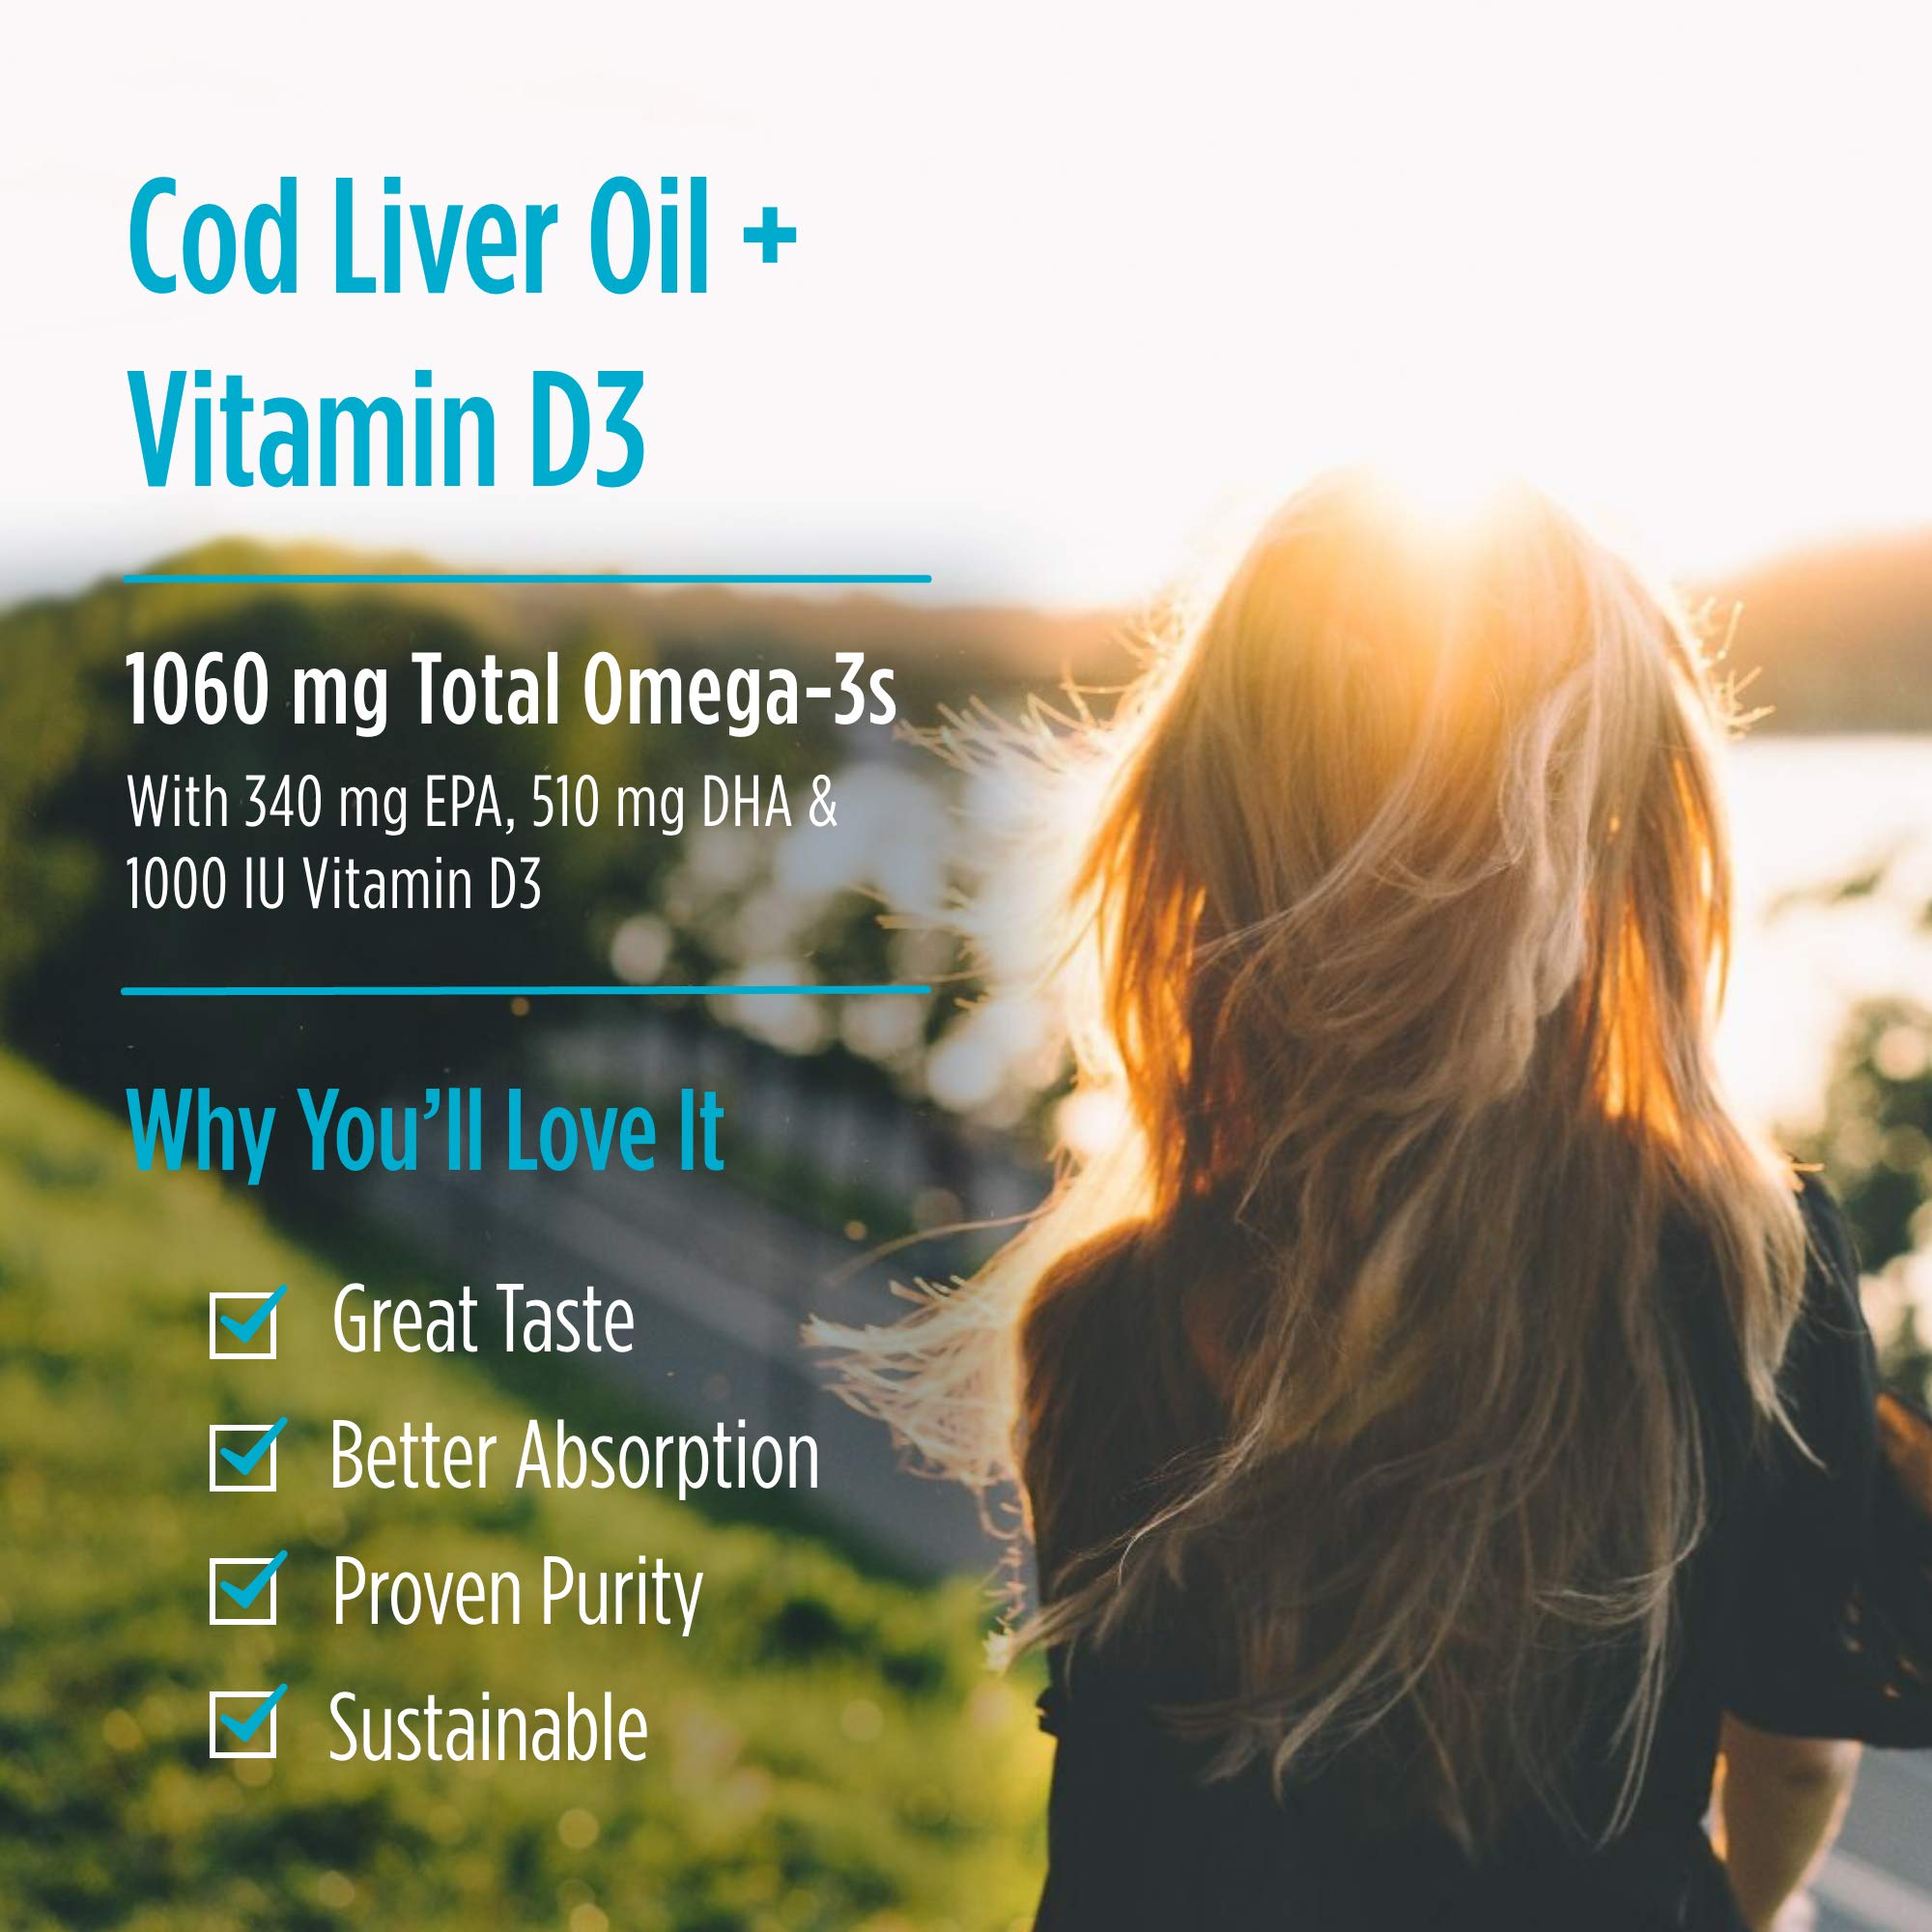 Nordic Naturals Arctic-D Cod Liver Oil, Lemon - 8 oz - 1060 mg Total Omega-3s + 1000 IU Vitamin D3 - EPA & DHA - Heart, Brain, Bone, Immune & Mood Support - Non-GMO - 48 Servings